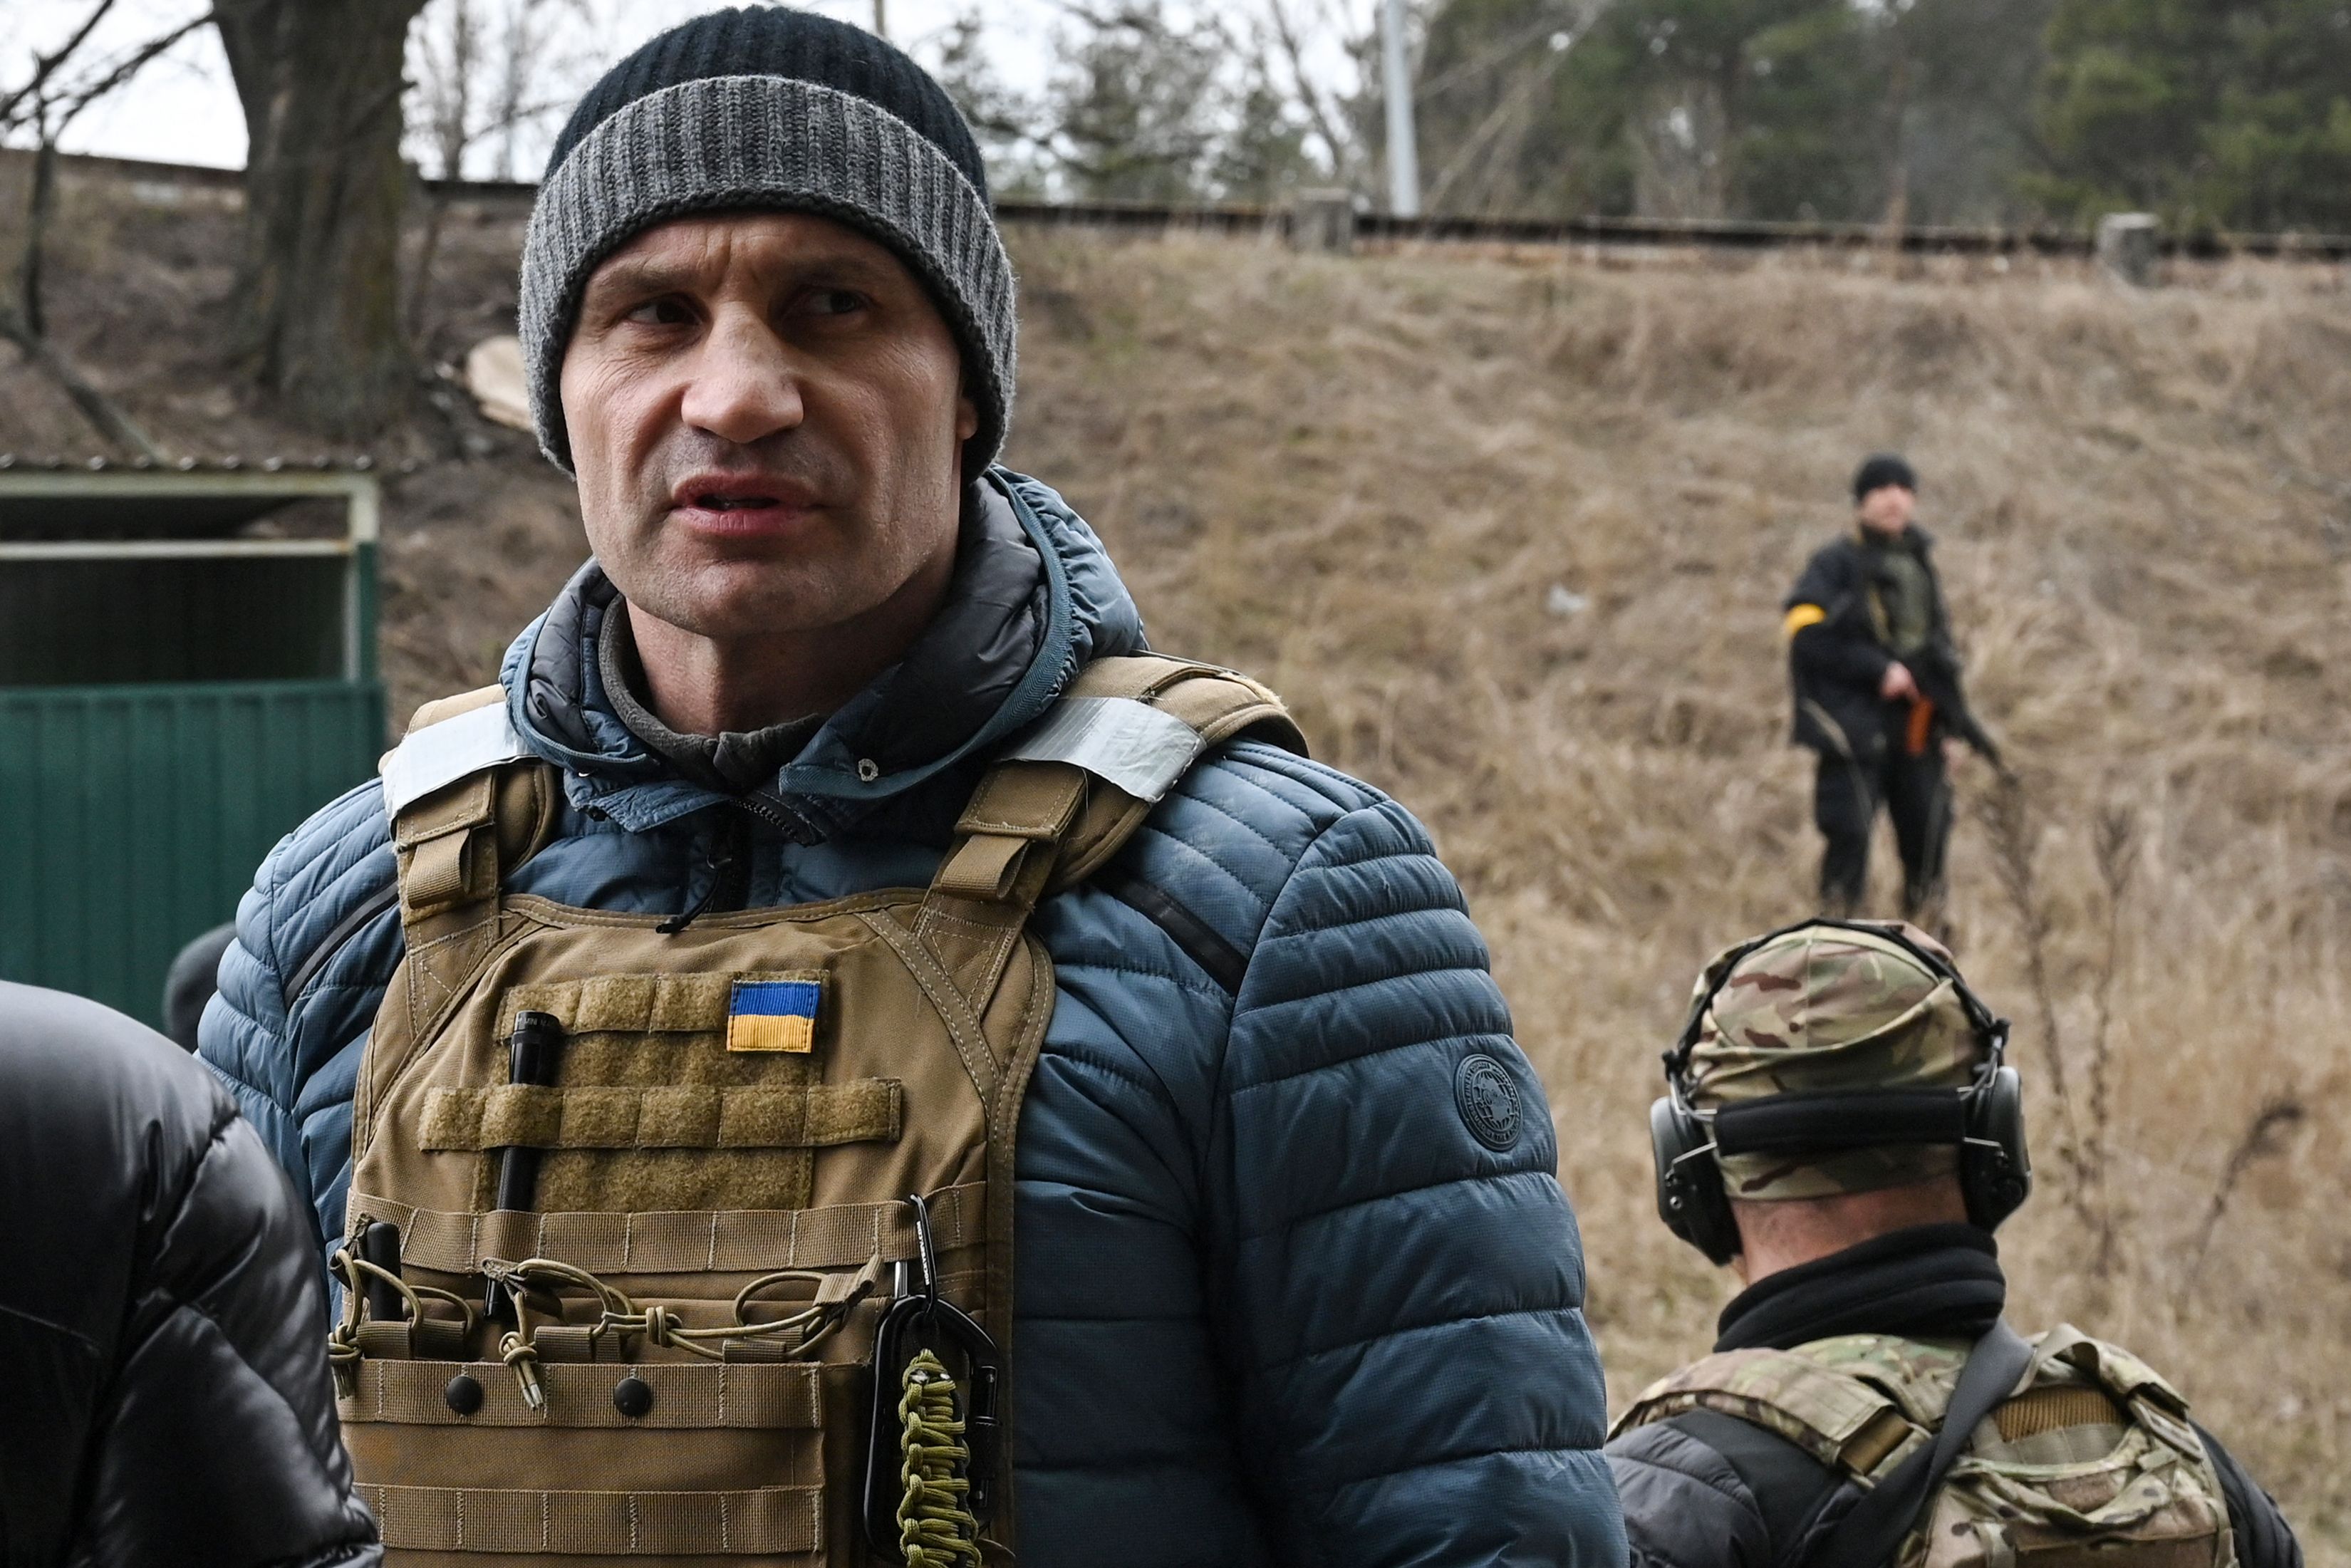 Kyiv mayor Vitali Klitschko visits a check-point on the outskirts of Kyiv, Ukraine, on March 6.